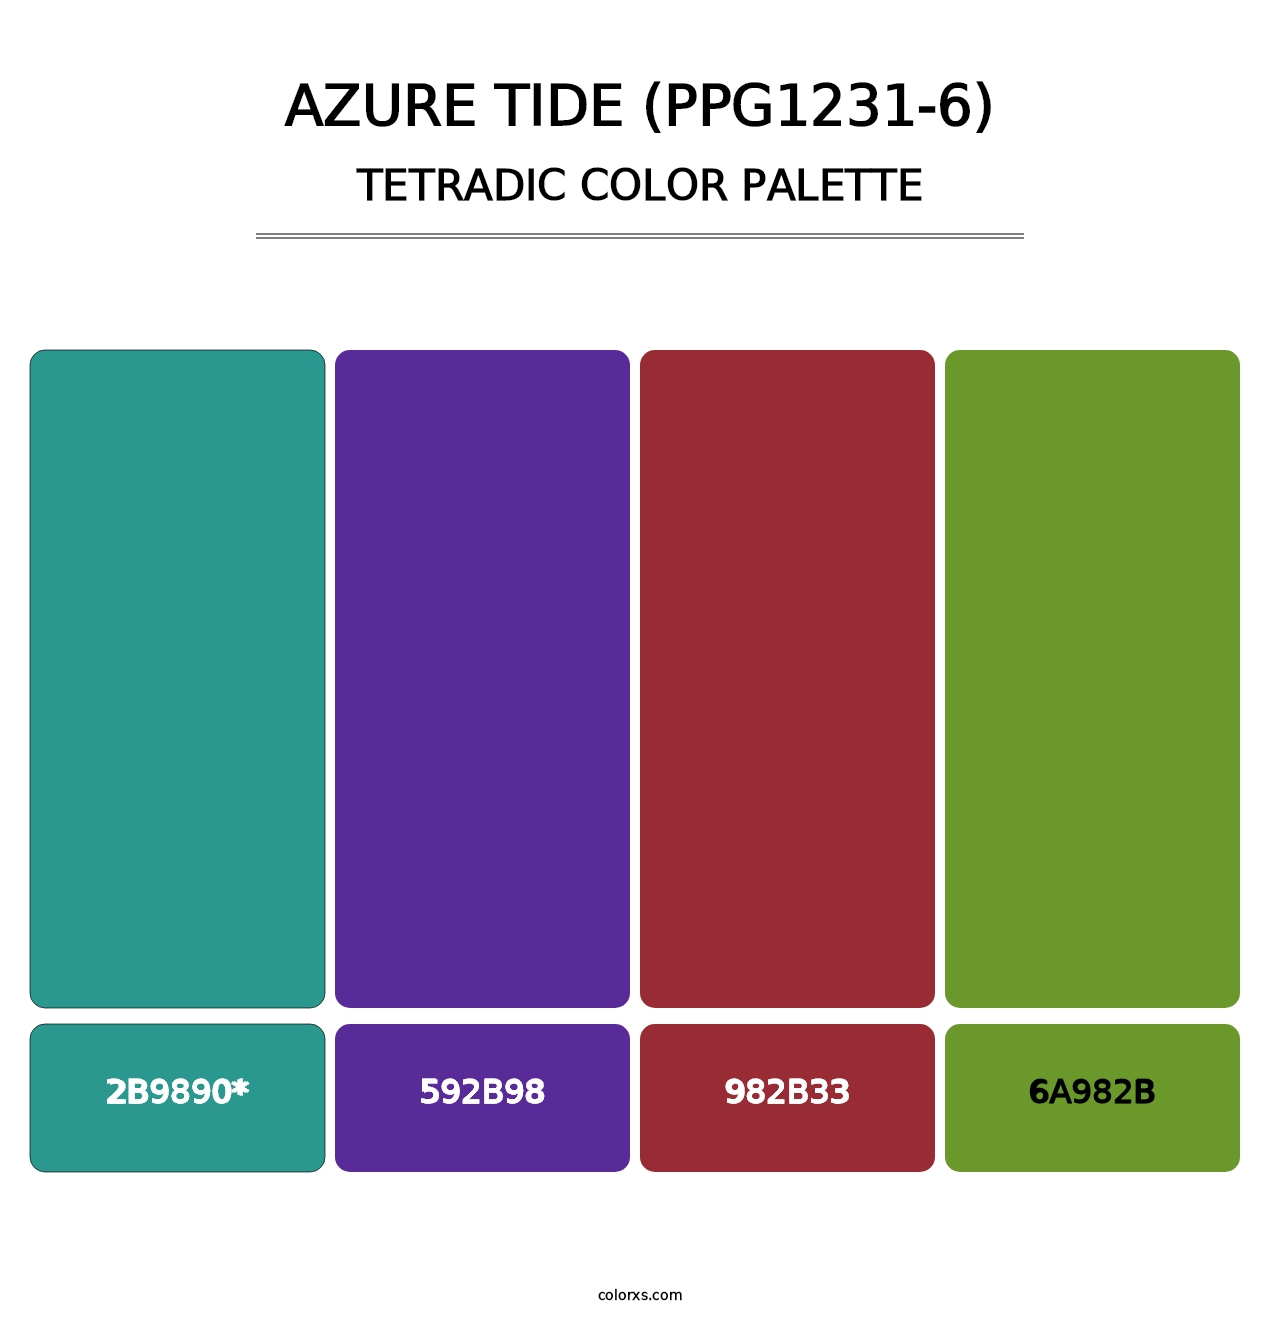 Azure Tide (PPG1231-6) - Tetradic Color Palette